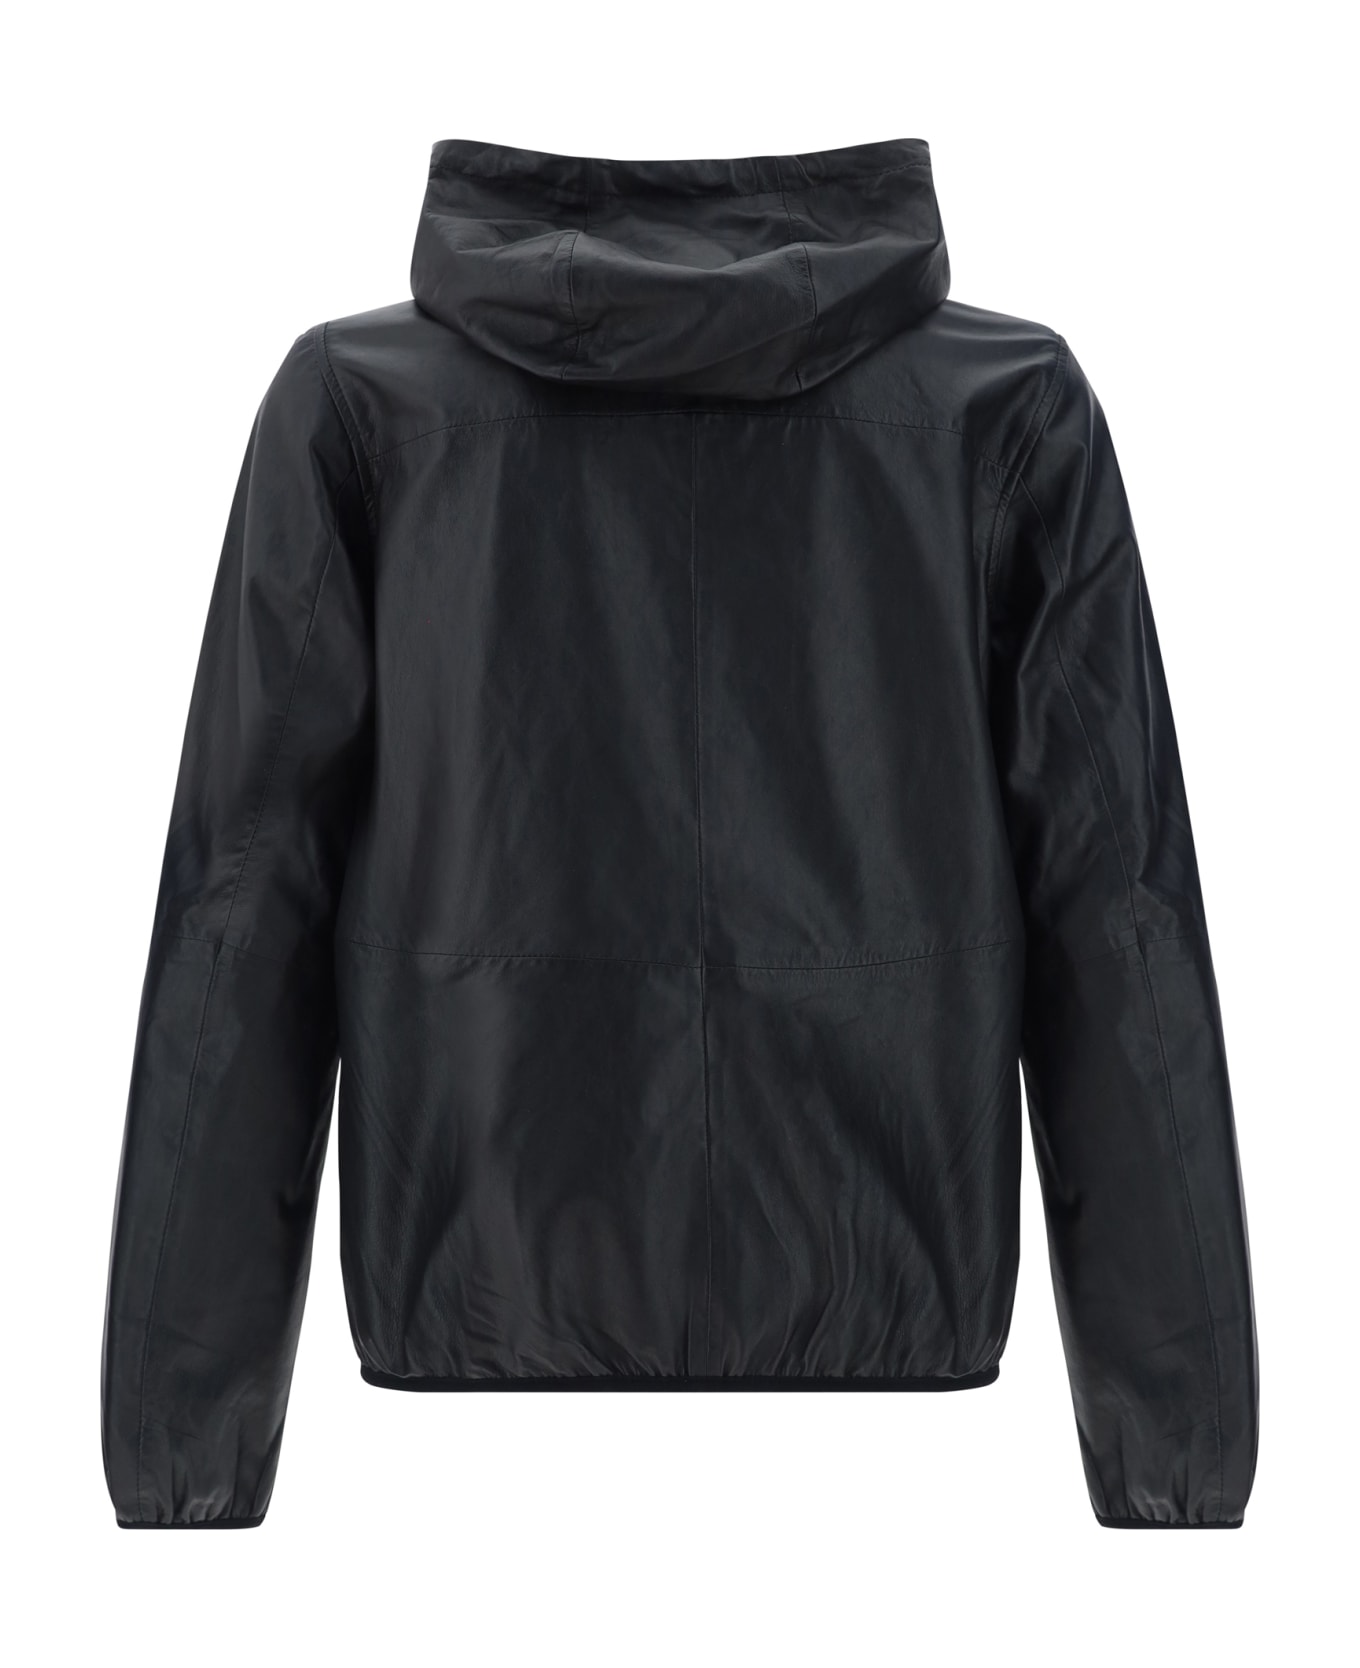 D'Amico Leather Dominic Reversible Jacket - Drum Dyed+nylon+nylon Nero/militare